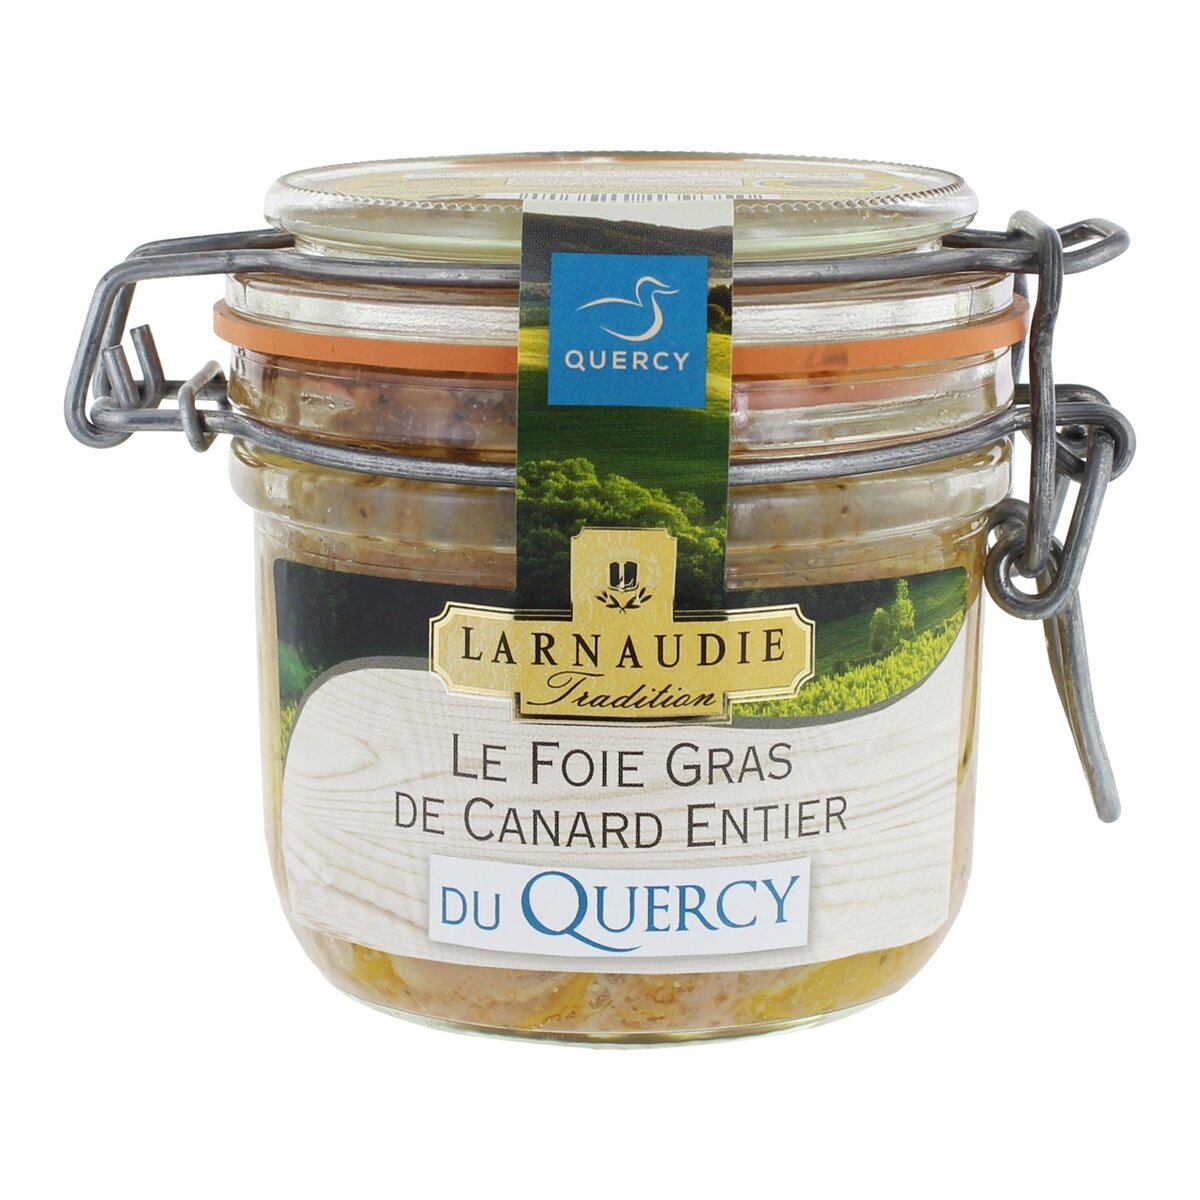 LARNAUDIE Larnaudie foie gras de canard tradition igp Quercy 180g